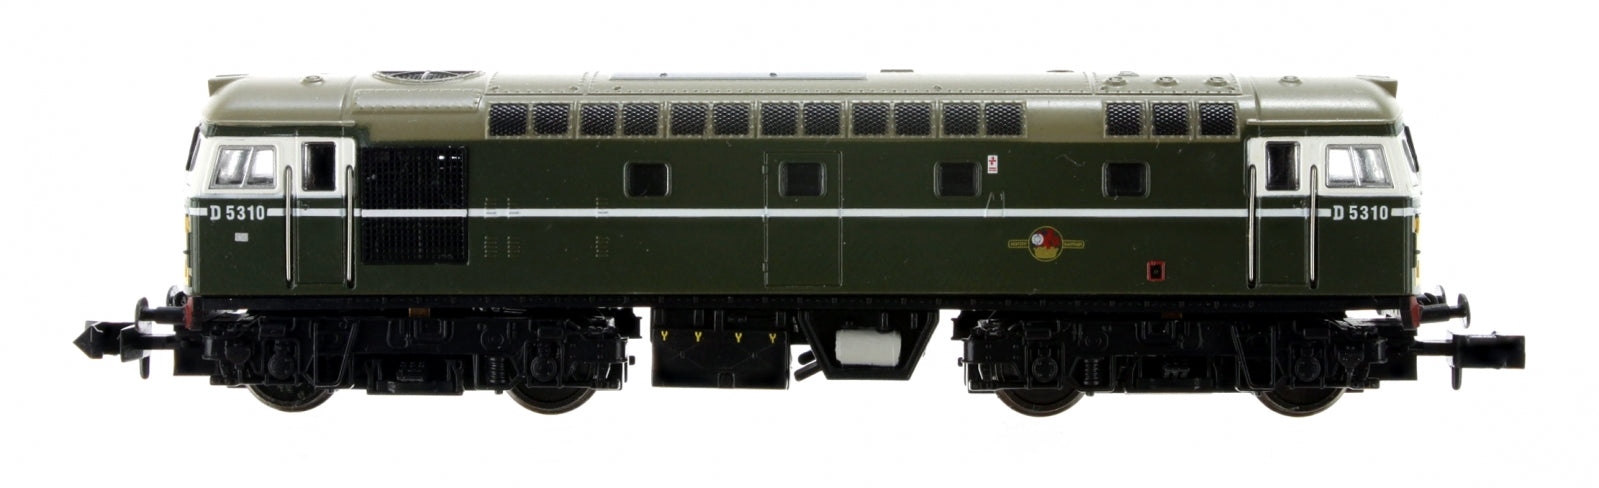 2D-028-002 N Gauge Class 26 D5310 BR Green SYP (Preserved)